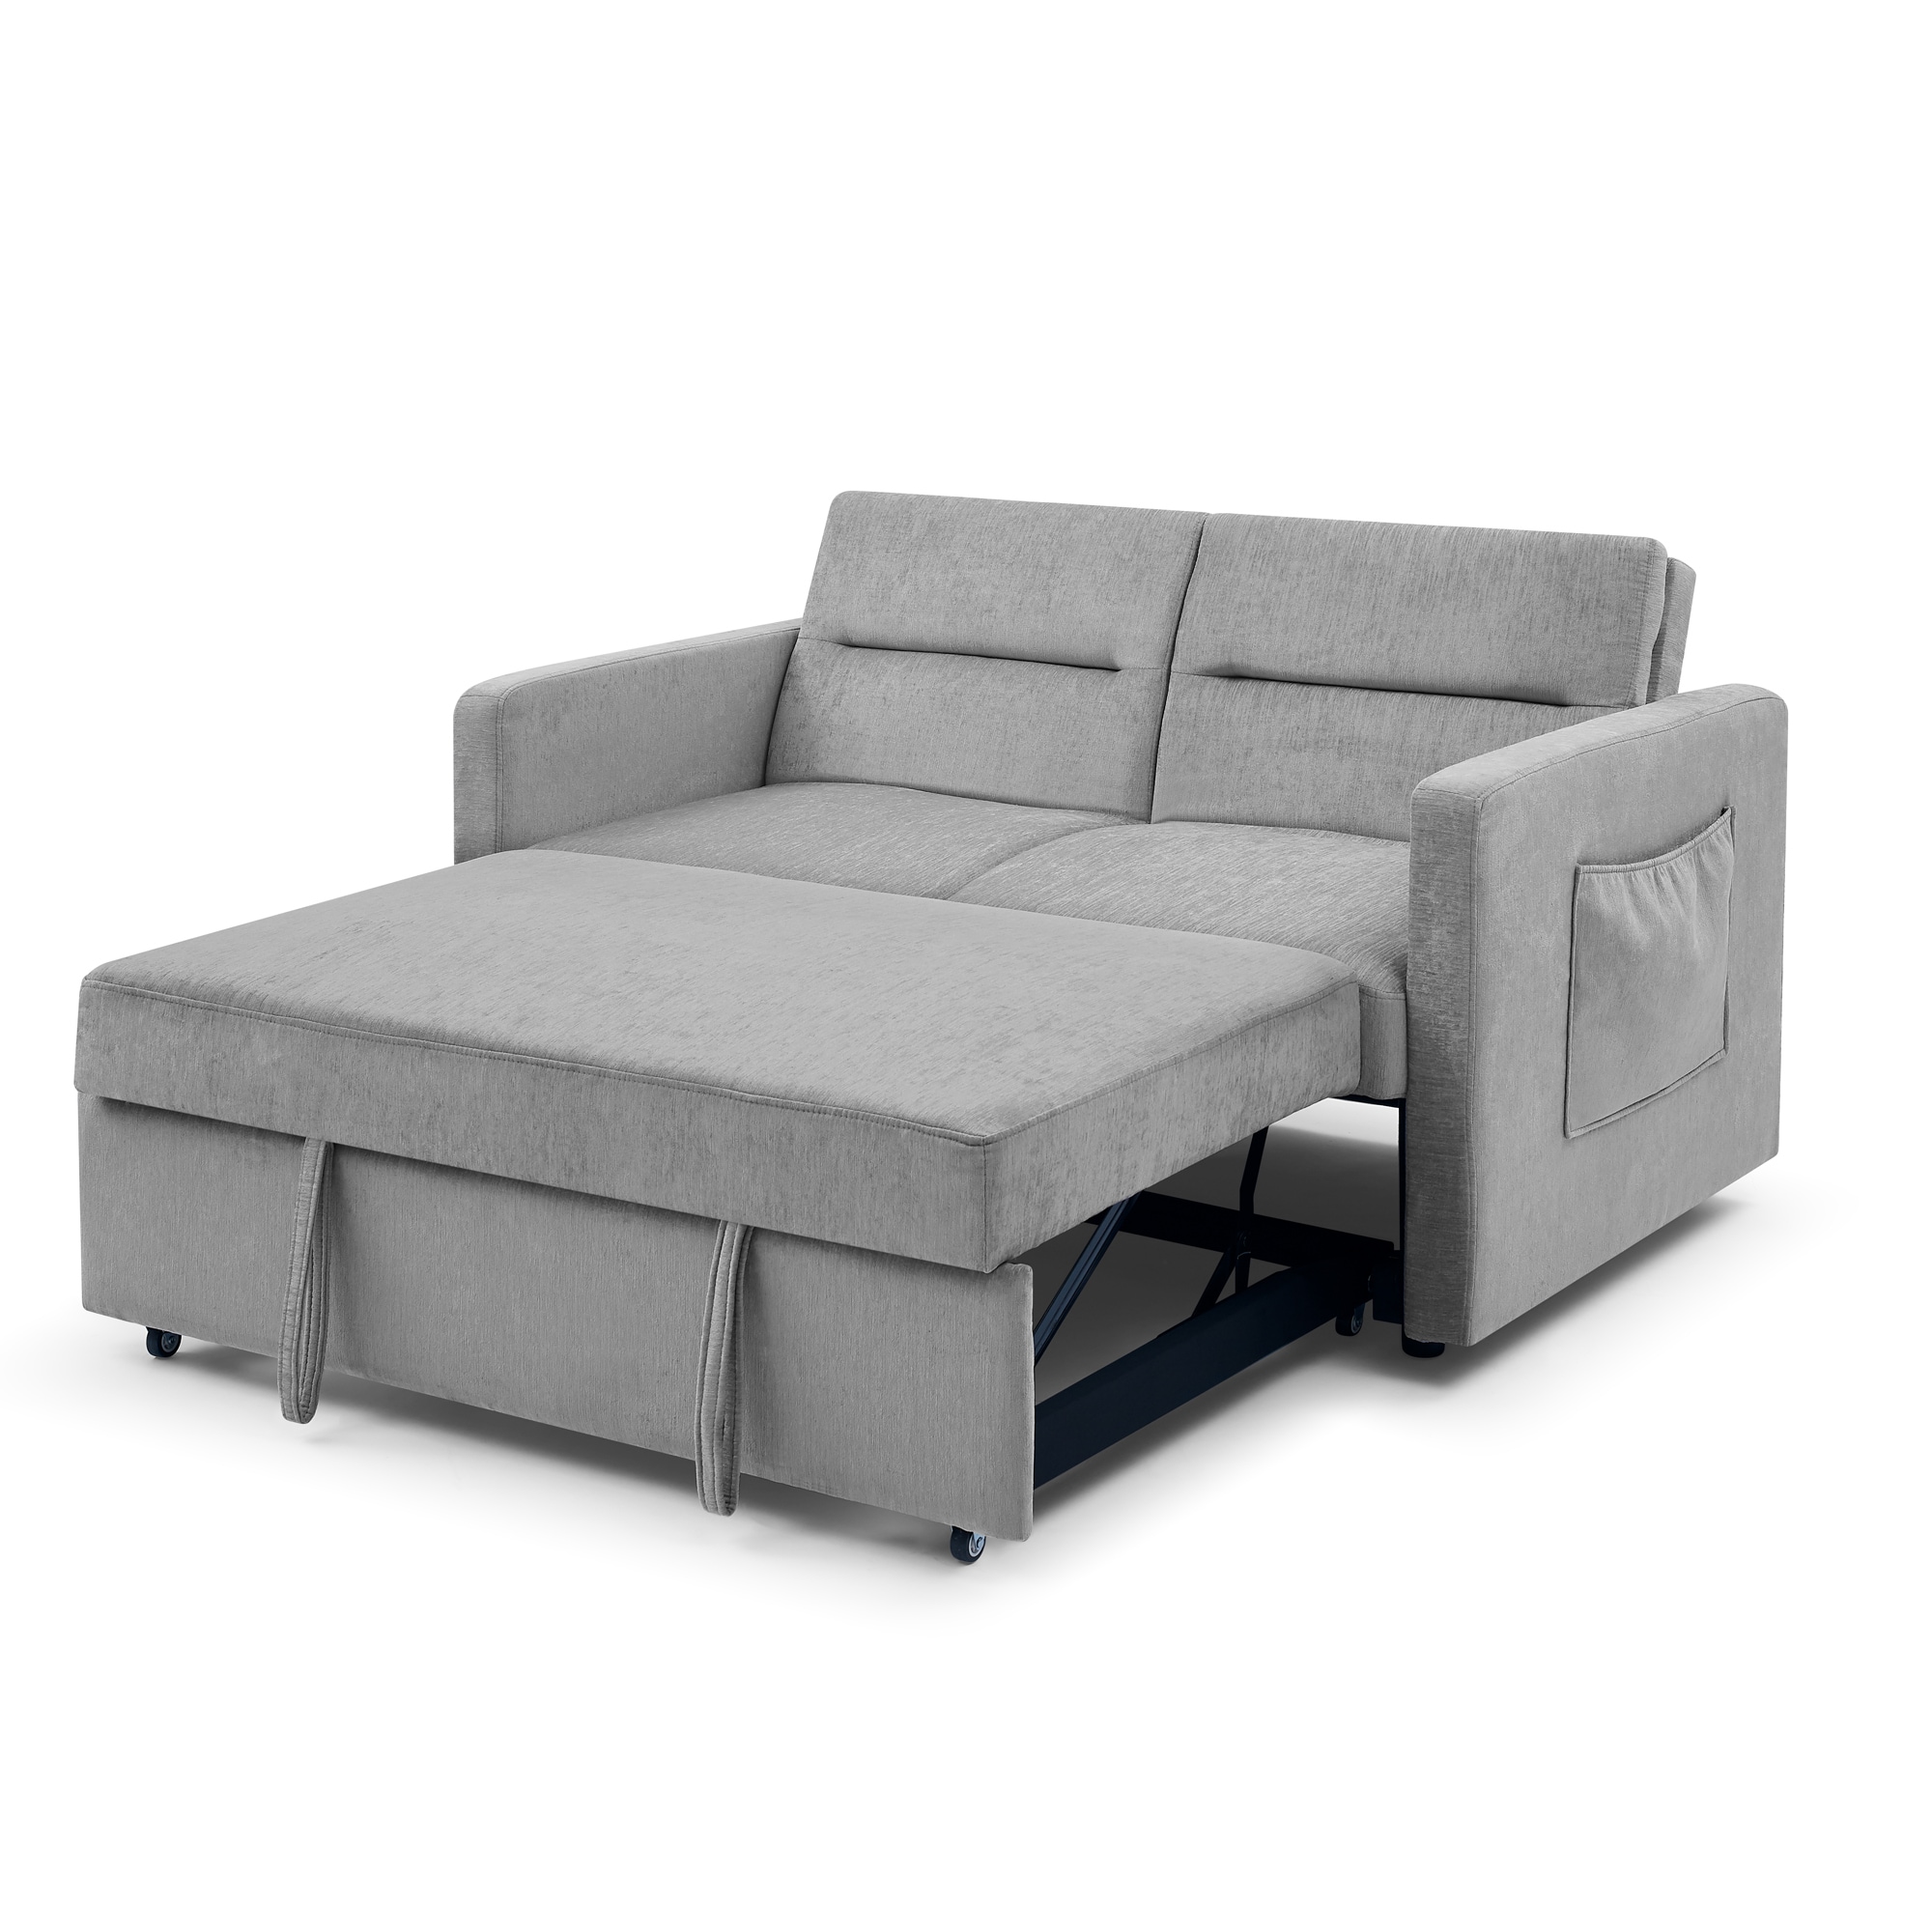 Serta Canyon Light Grey Casual Polyester Twin Sofa Bed at